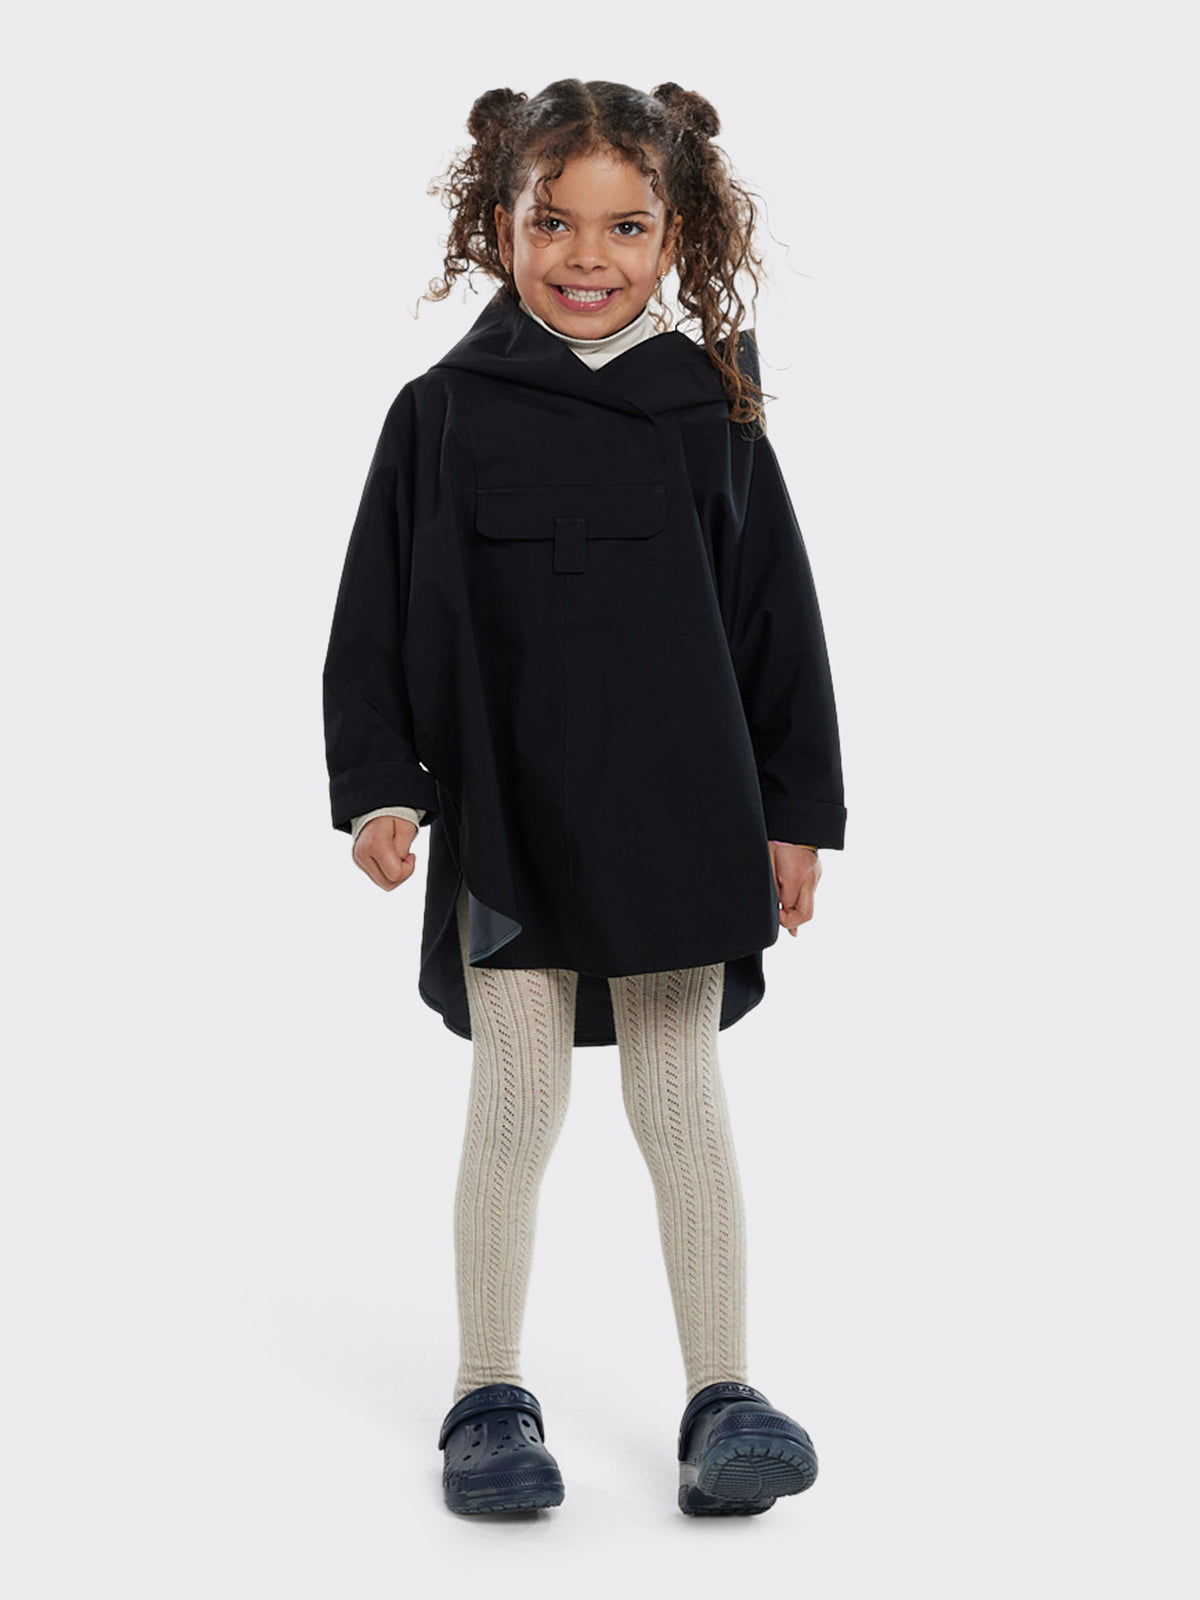 Kid wearing Bergen mini poncho from Blæst in Black